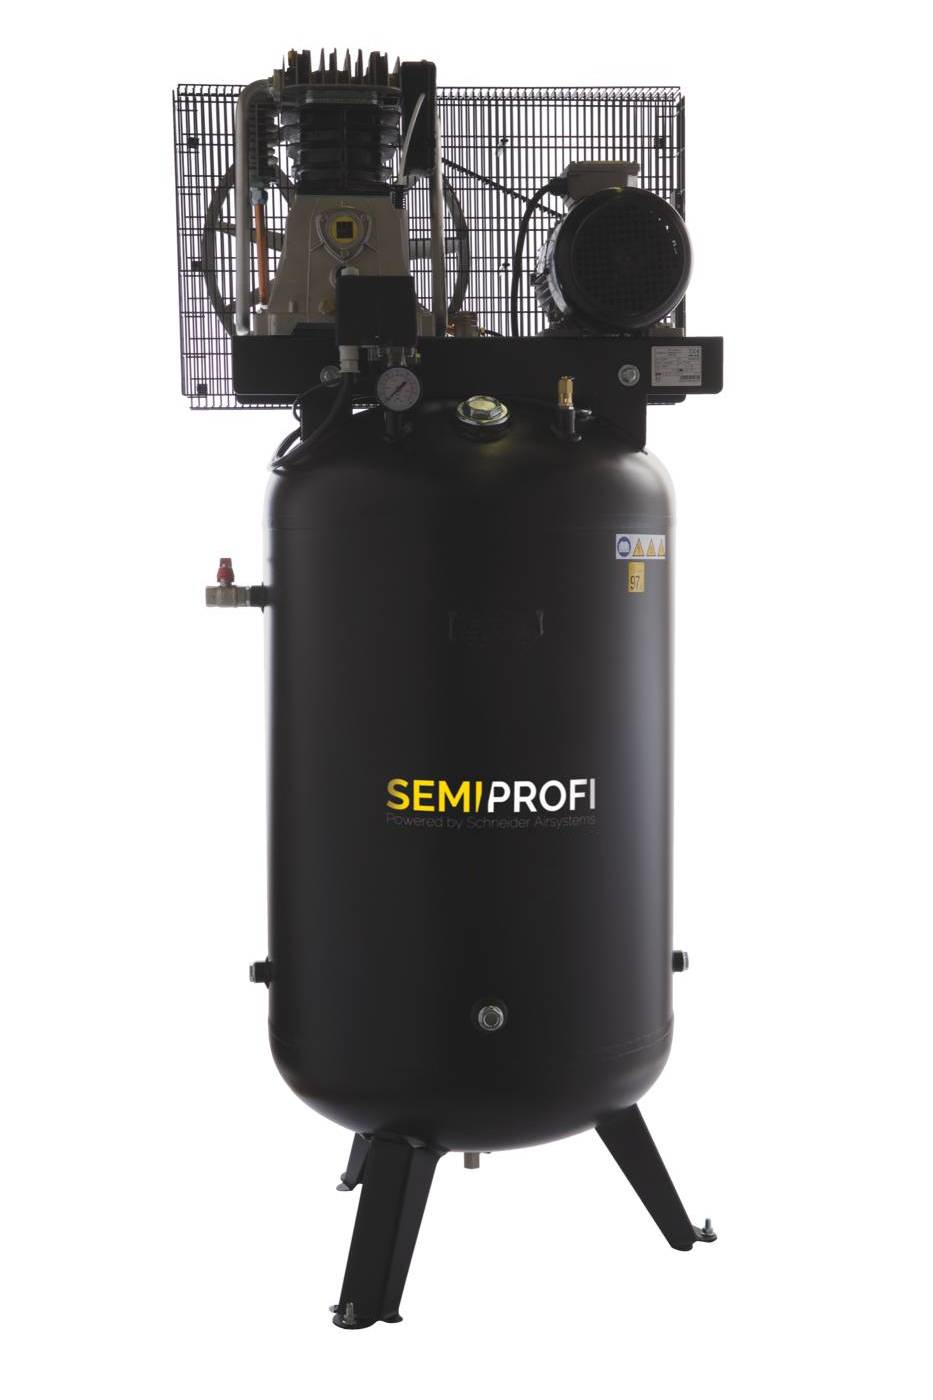 Schneider SEMI PROFI STS 830-10-270 D kompresor